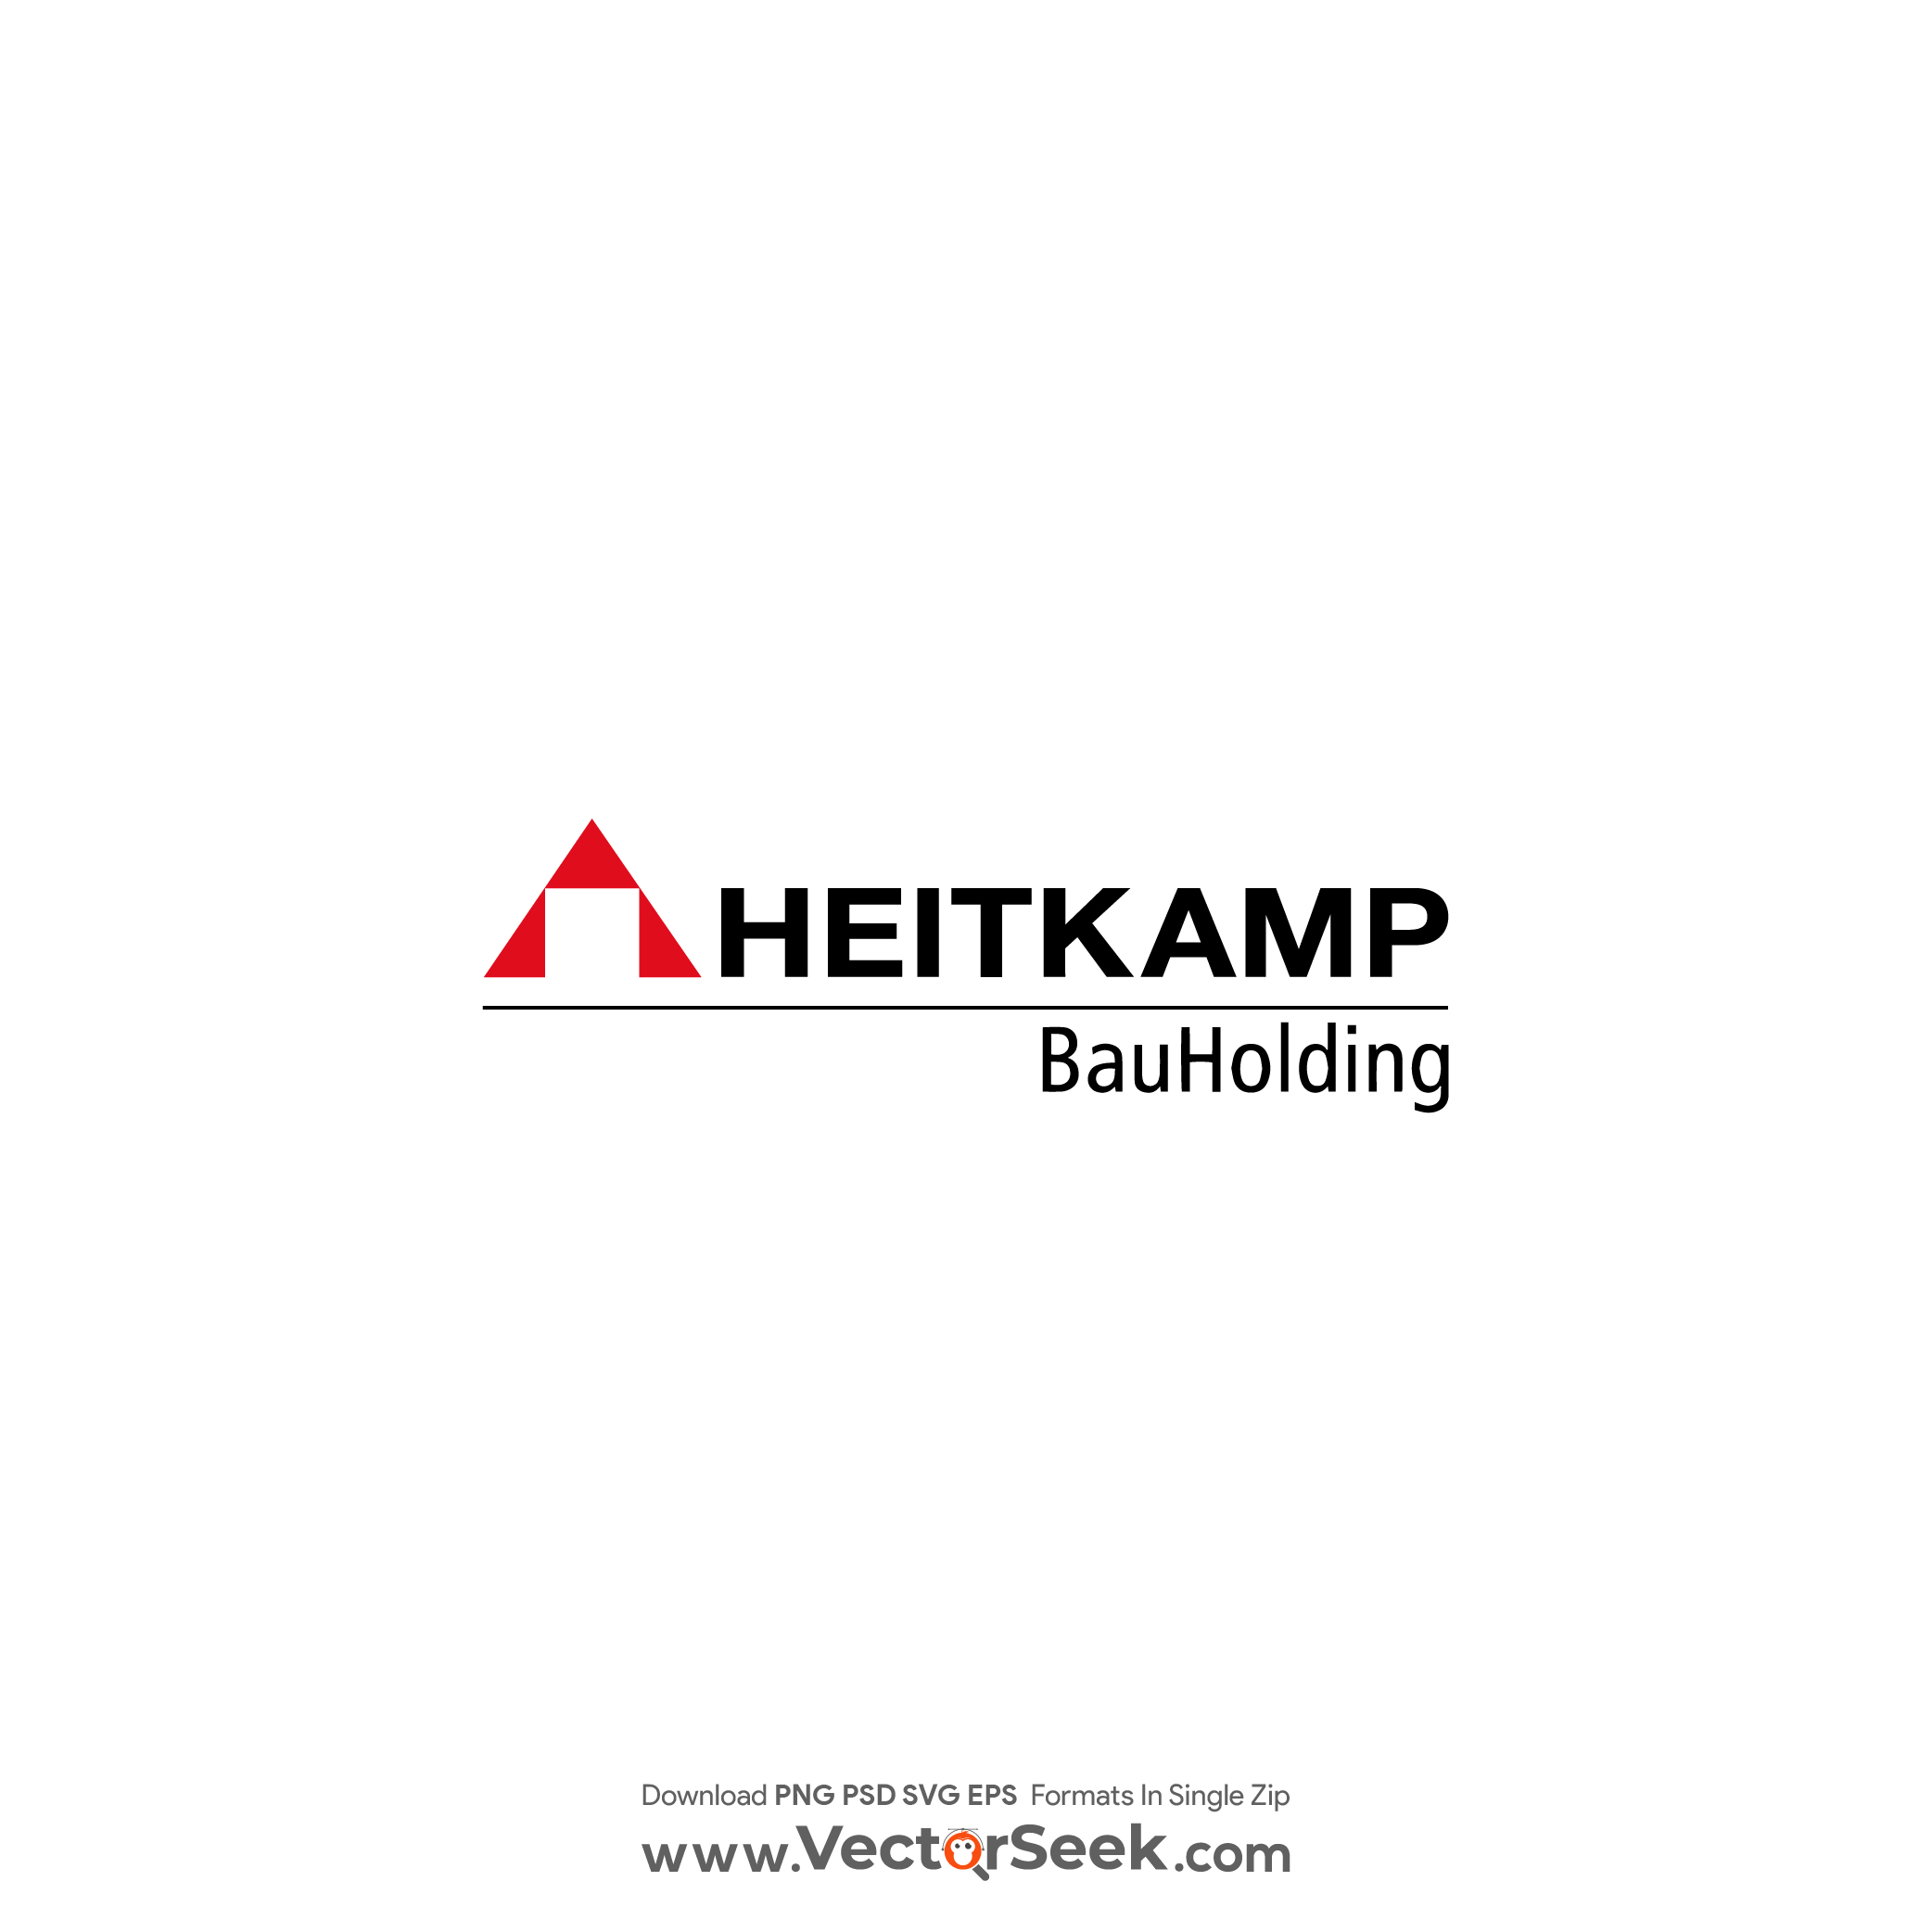 Heitkamp BauHolding Logo Vector